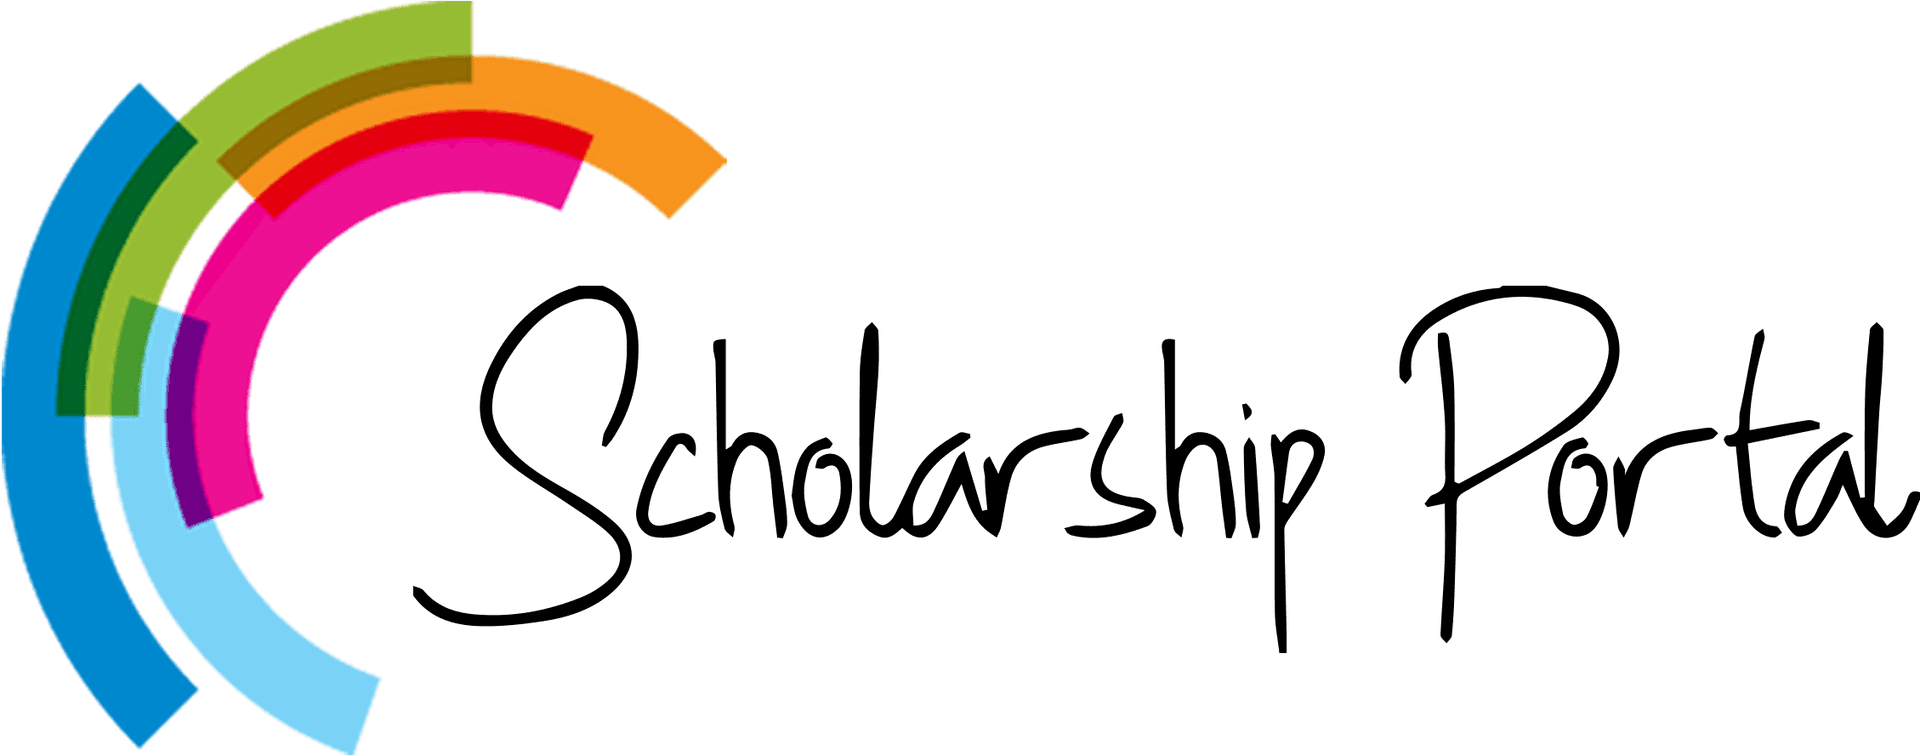 Colorful Scholarship Portal Logo PNG